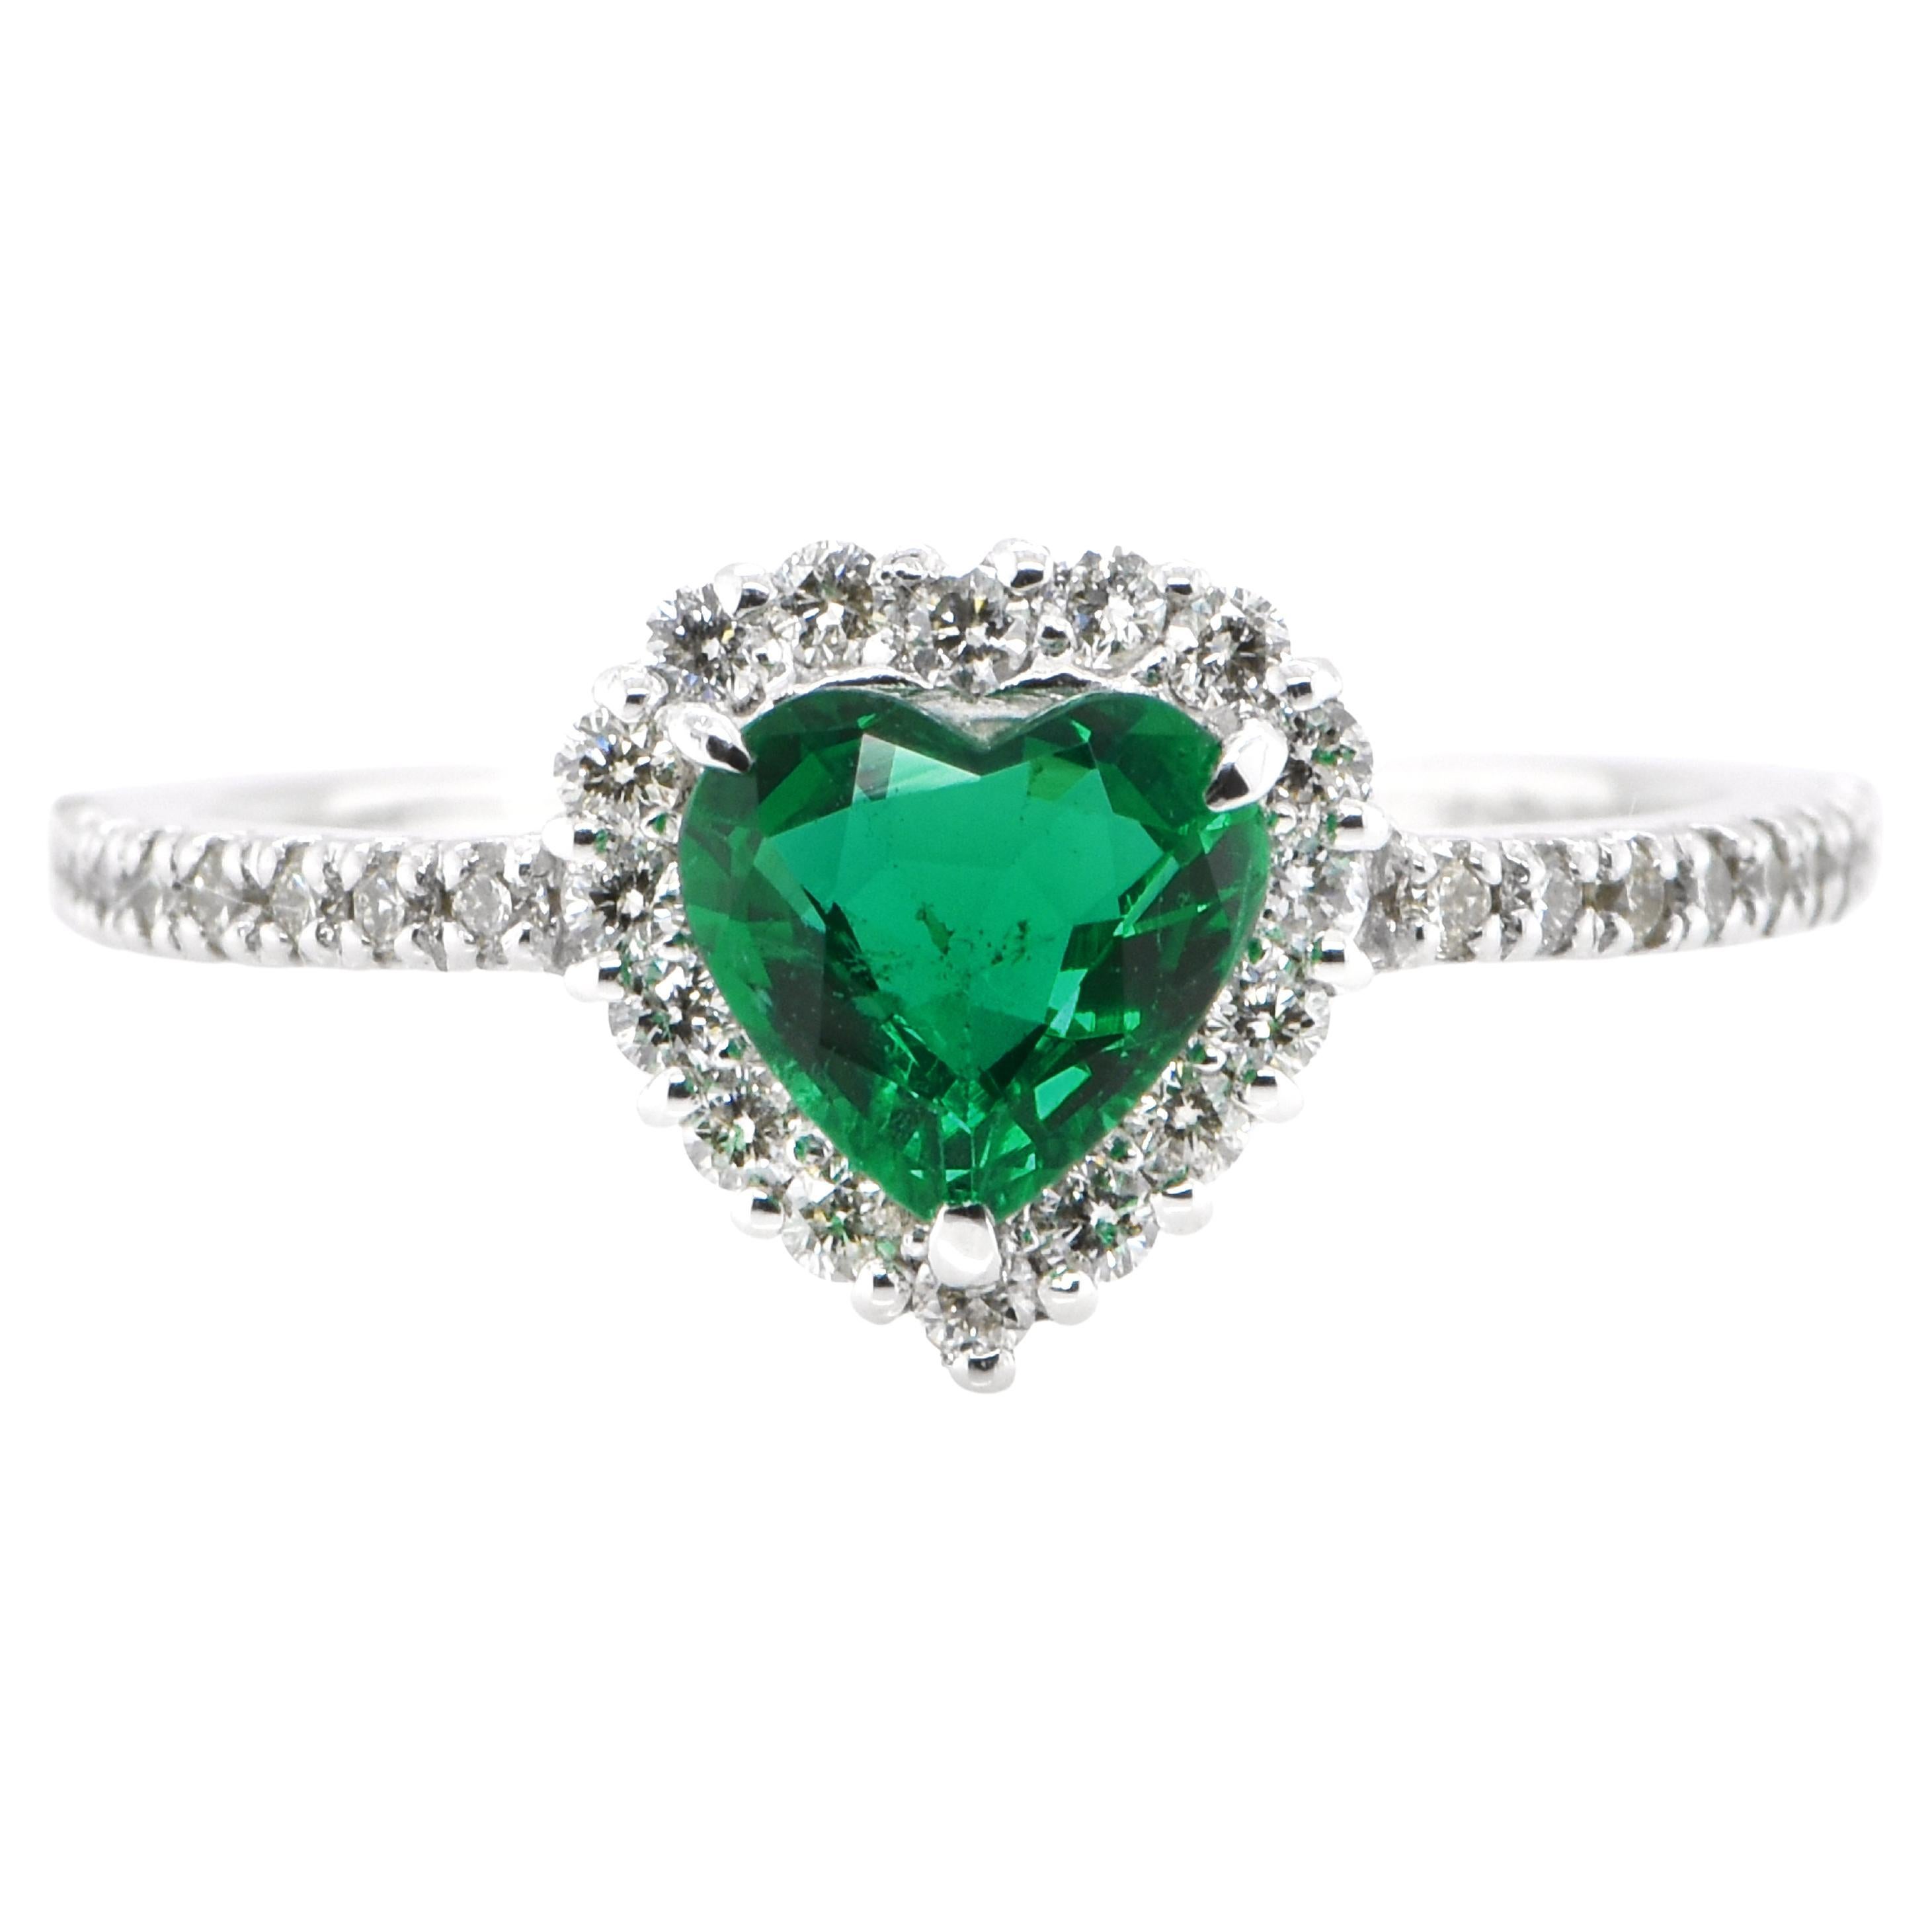  0.63 Carat Natural, Heart-Cut, Zambian Emerald & Diamond Ring Set in Platinum For Sale